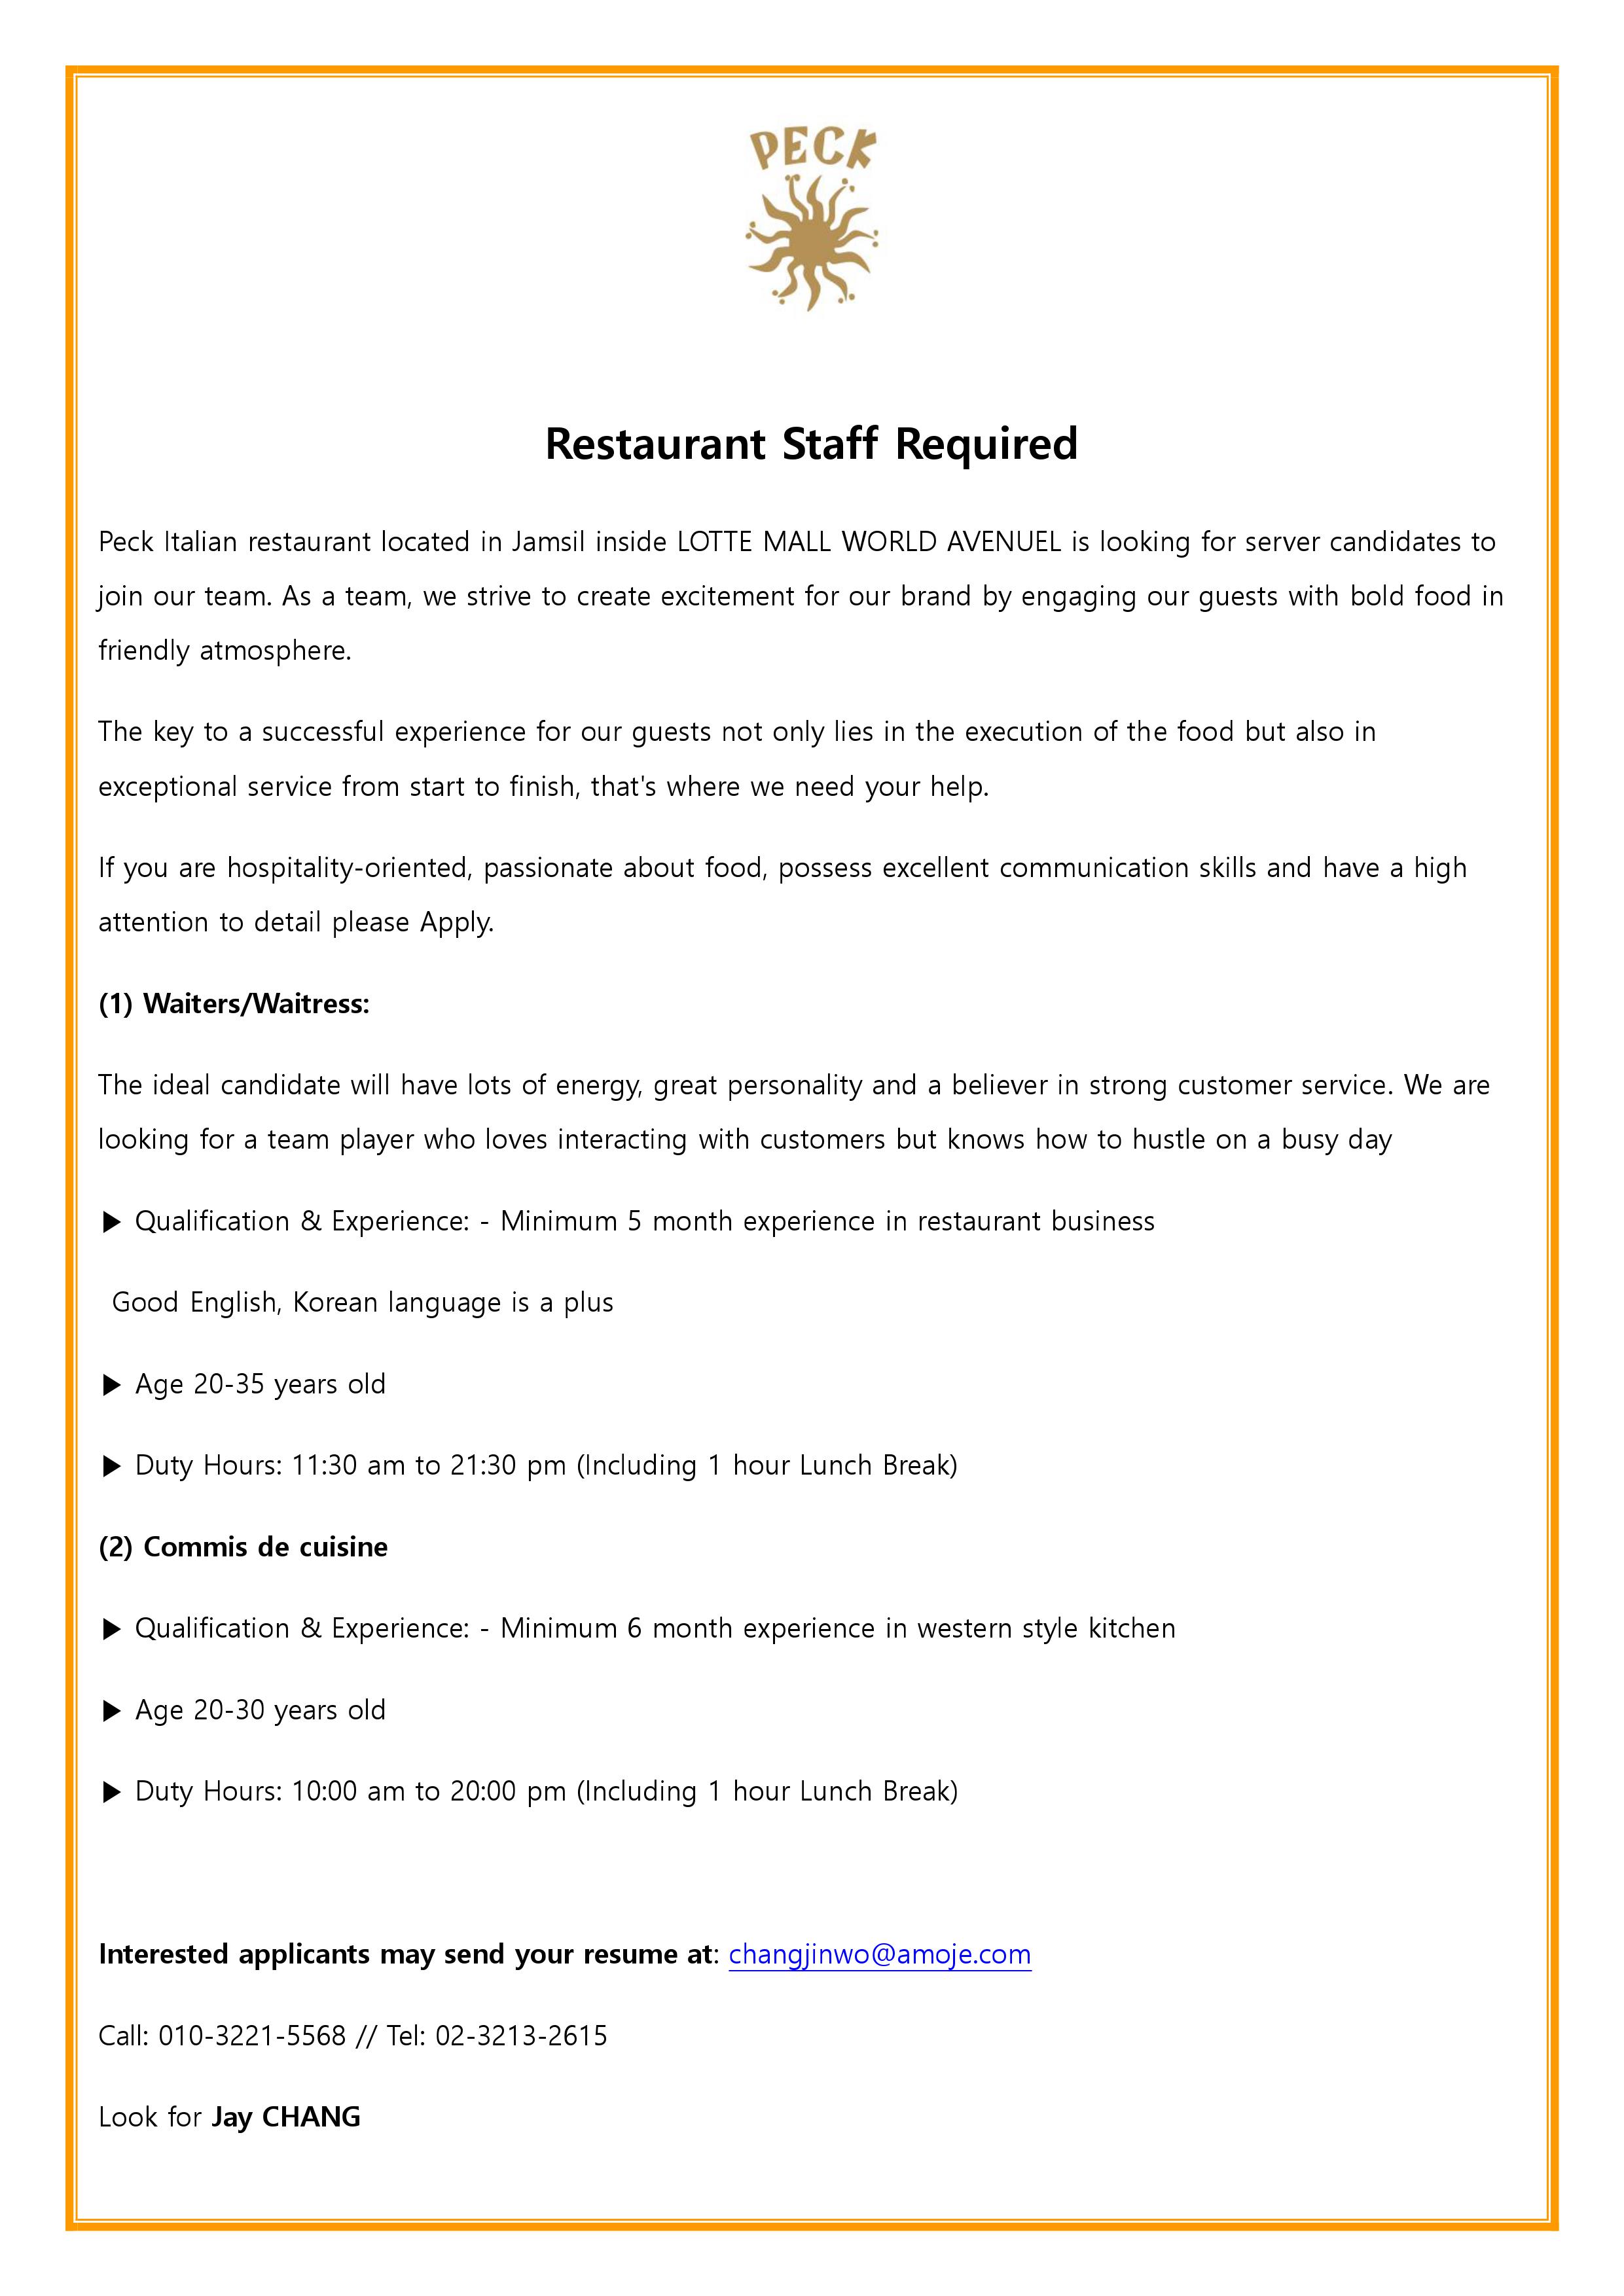 PECK Seoul - Restaurant staff required